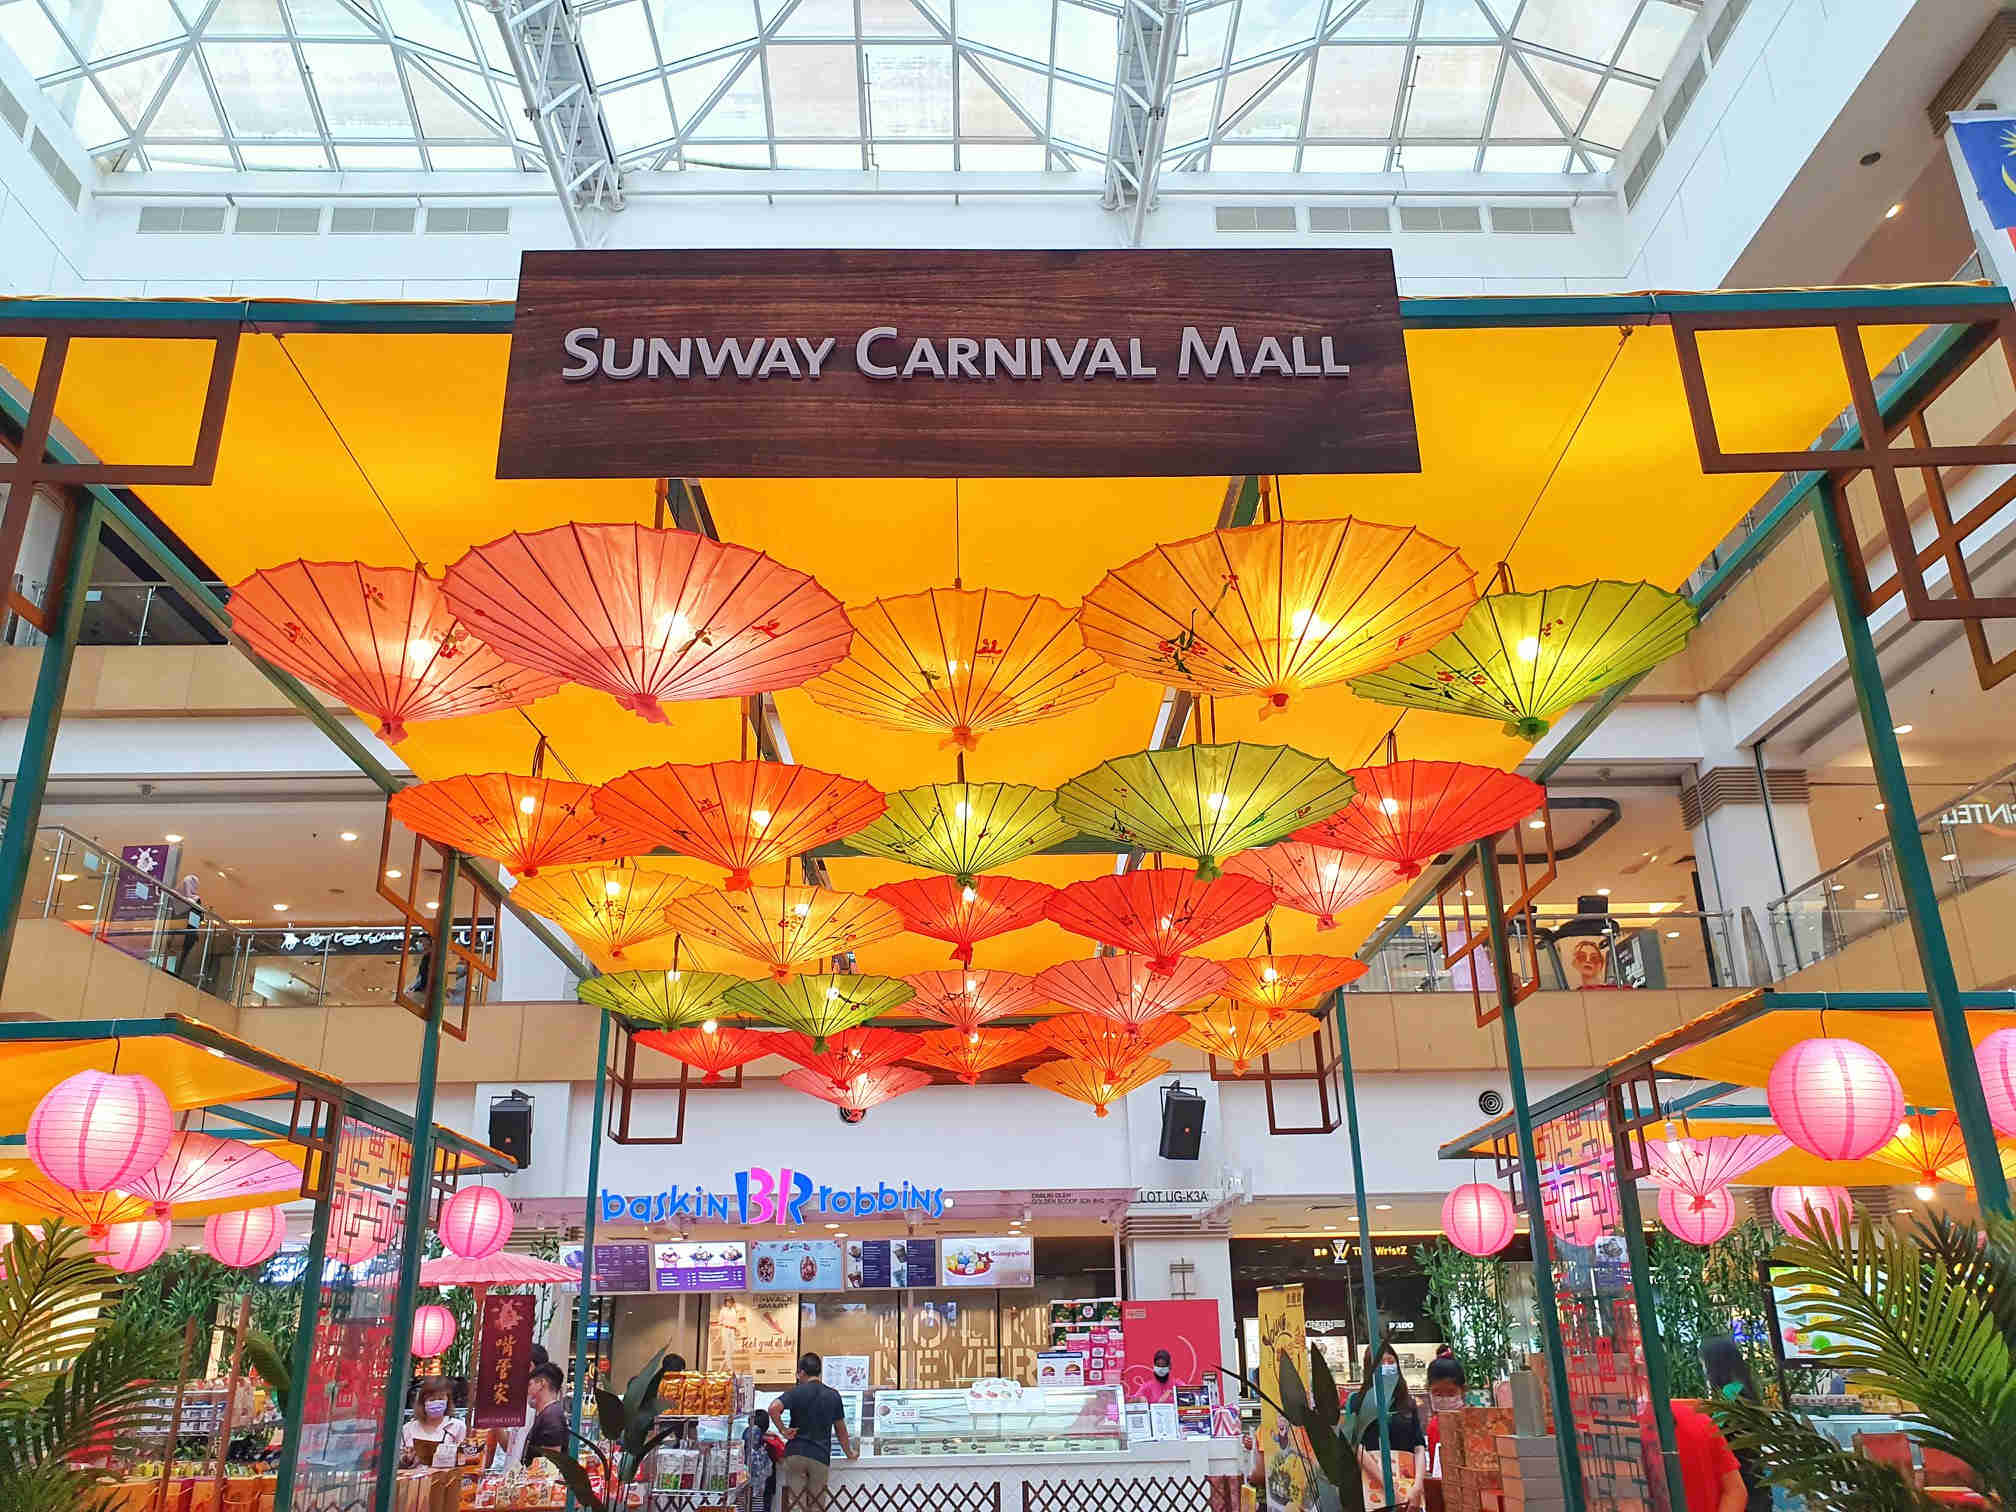 sunway malls mid autumn fair @ sunway carnival mall